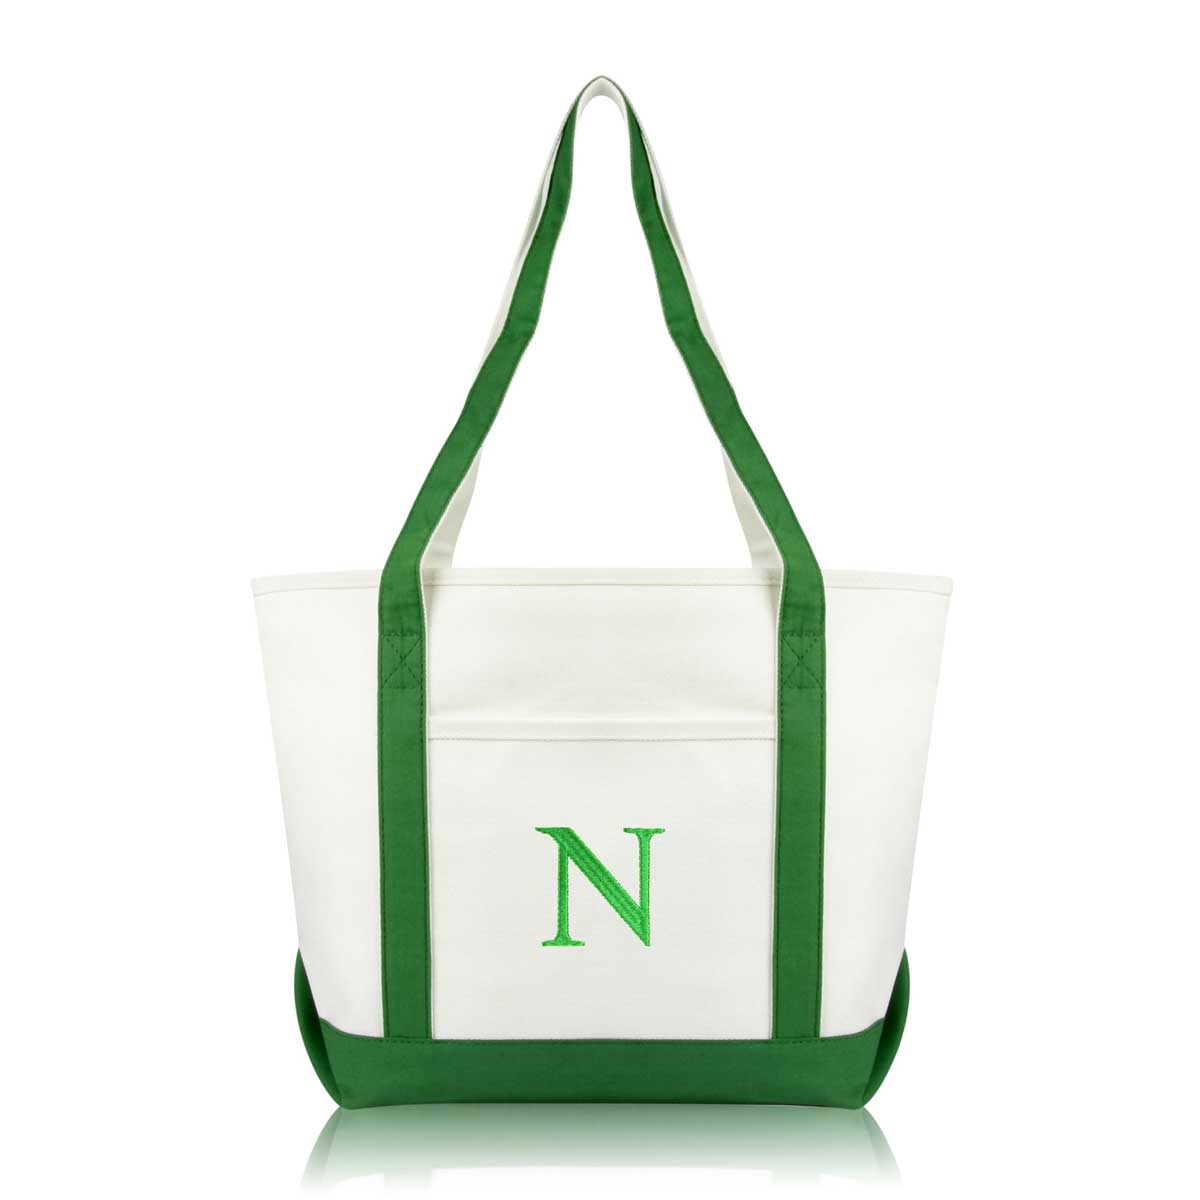 Dalix Medium Personalized Tote Bag Monogrammed Initial Letter - N